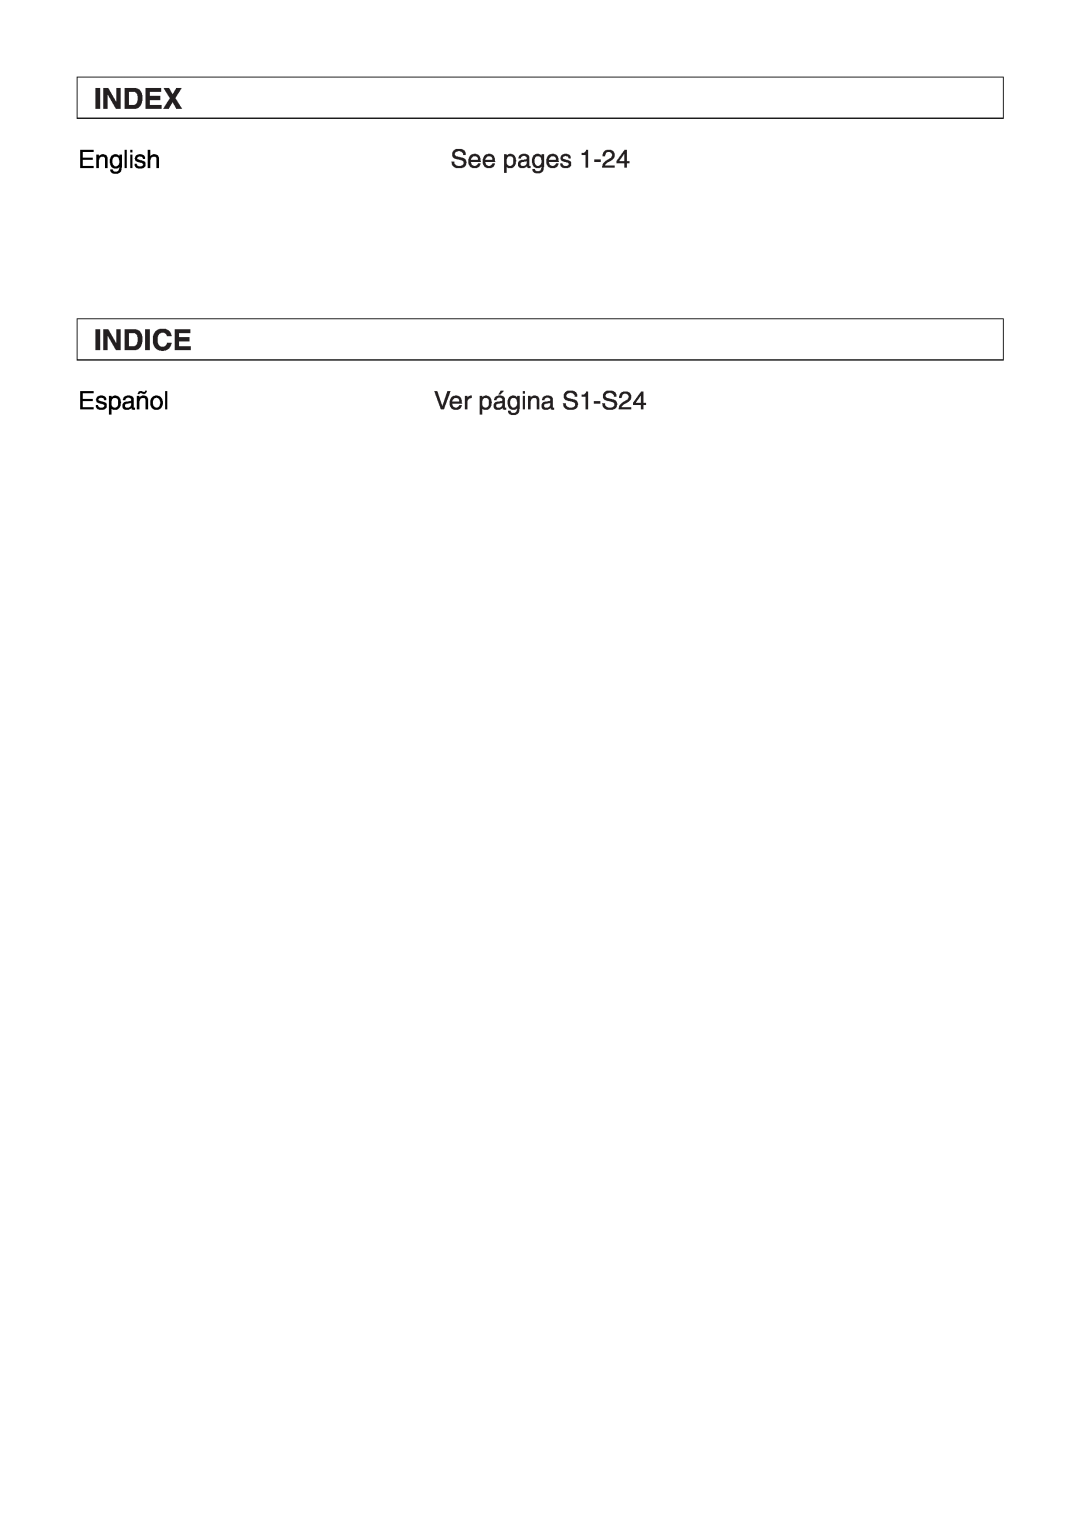 Panasonic EP1273 operating instructions Index, Indice, English, Español, See pages, Ver página S1-S24 